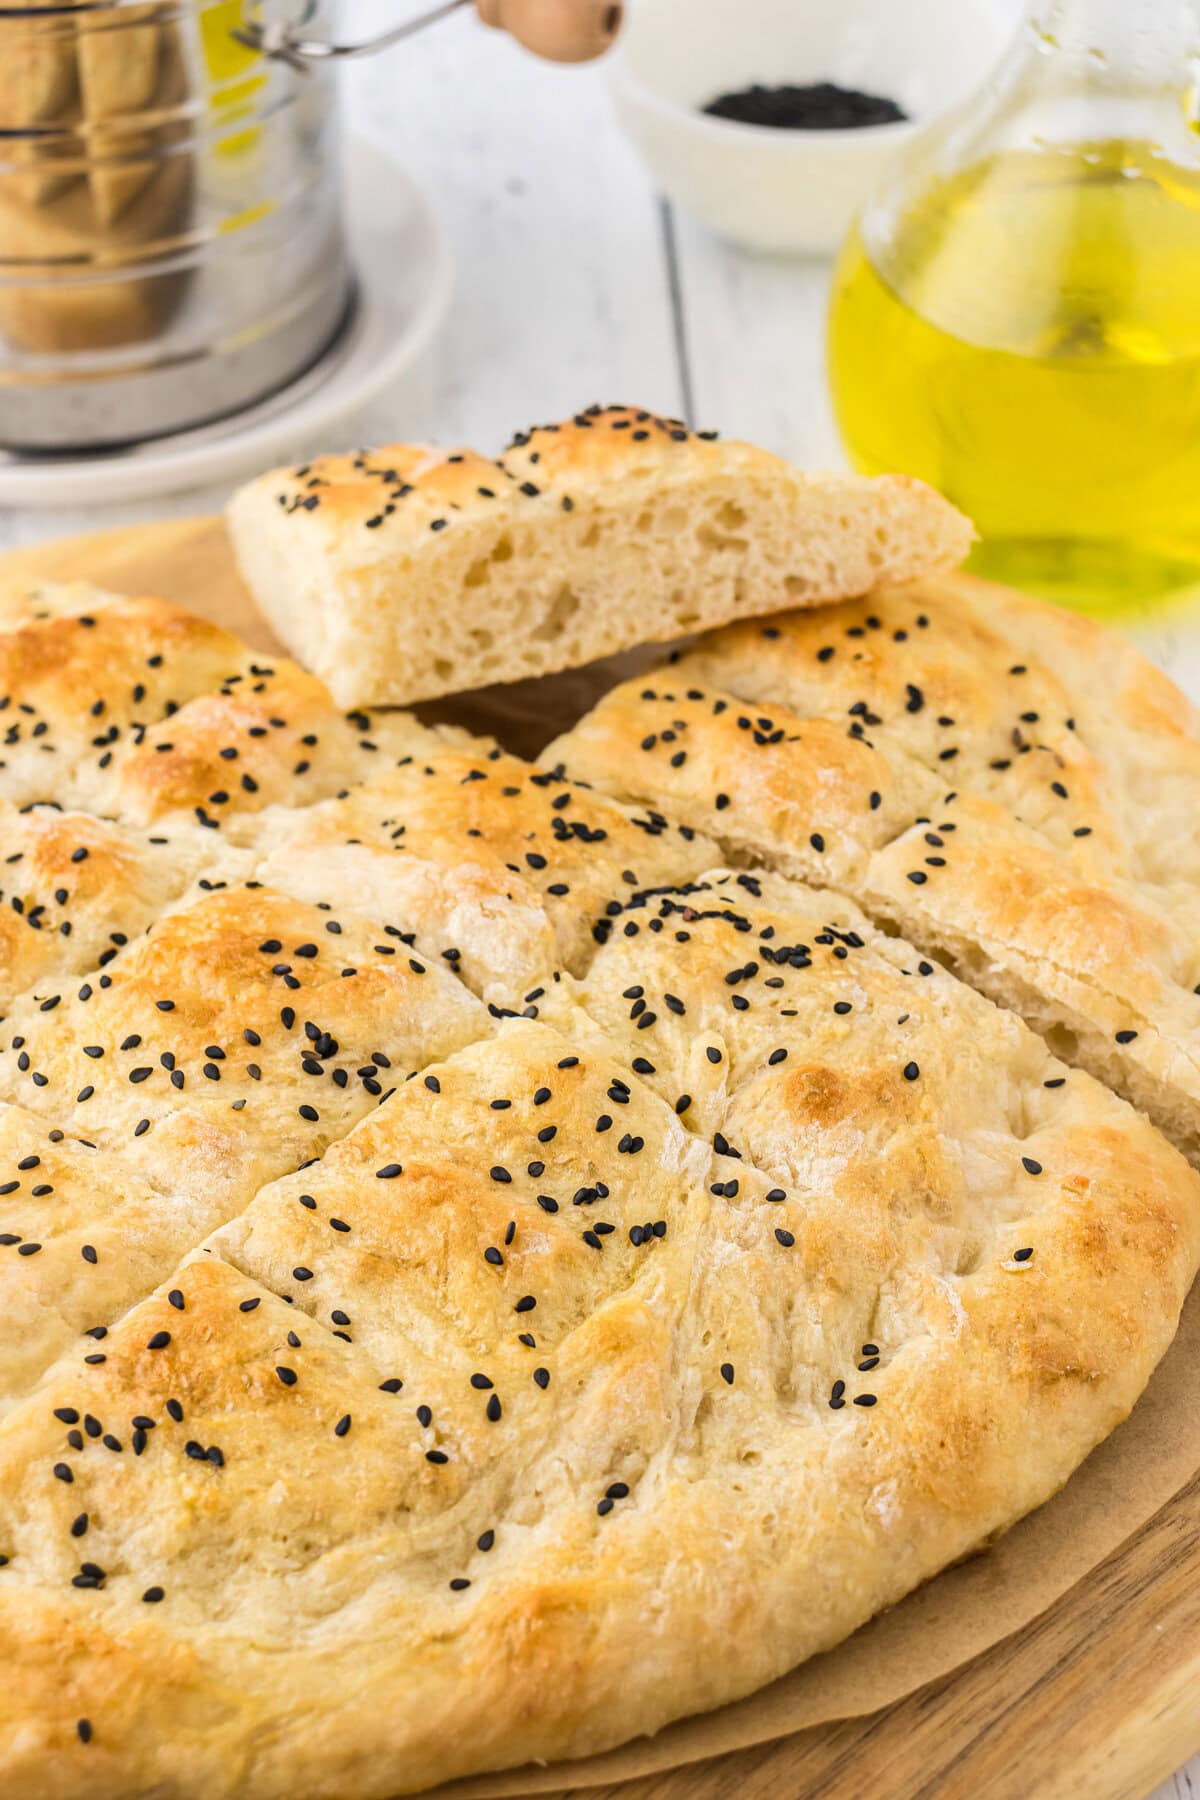 A golden brown loaf of Turkish bread with black sesame seeds on top.